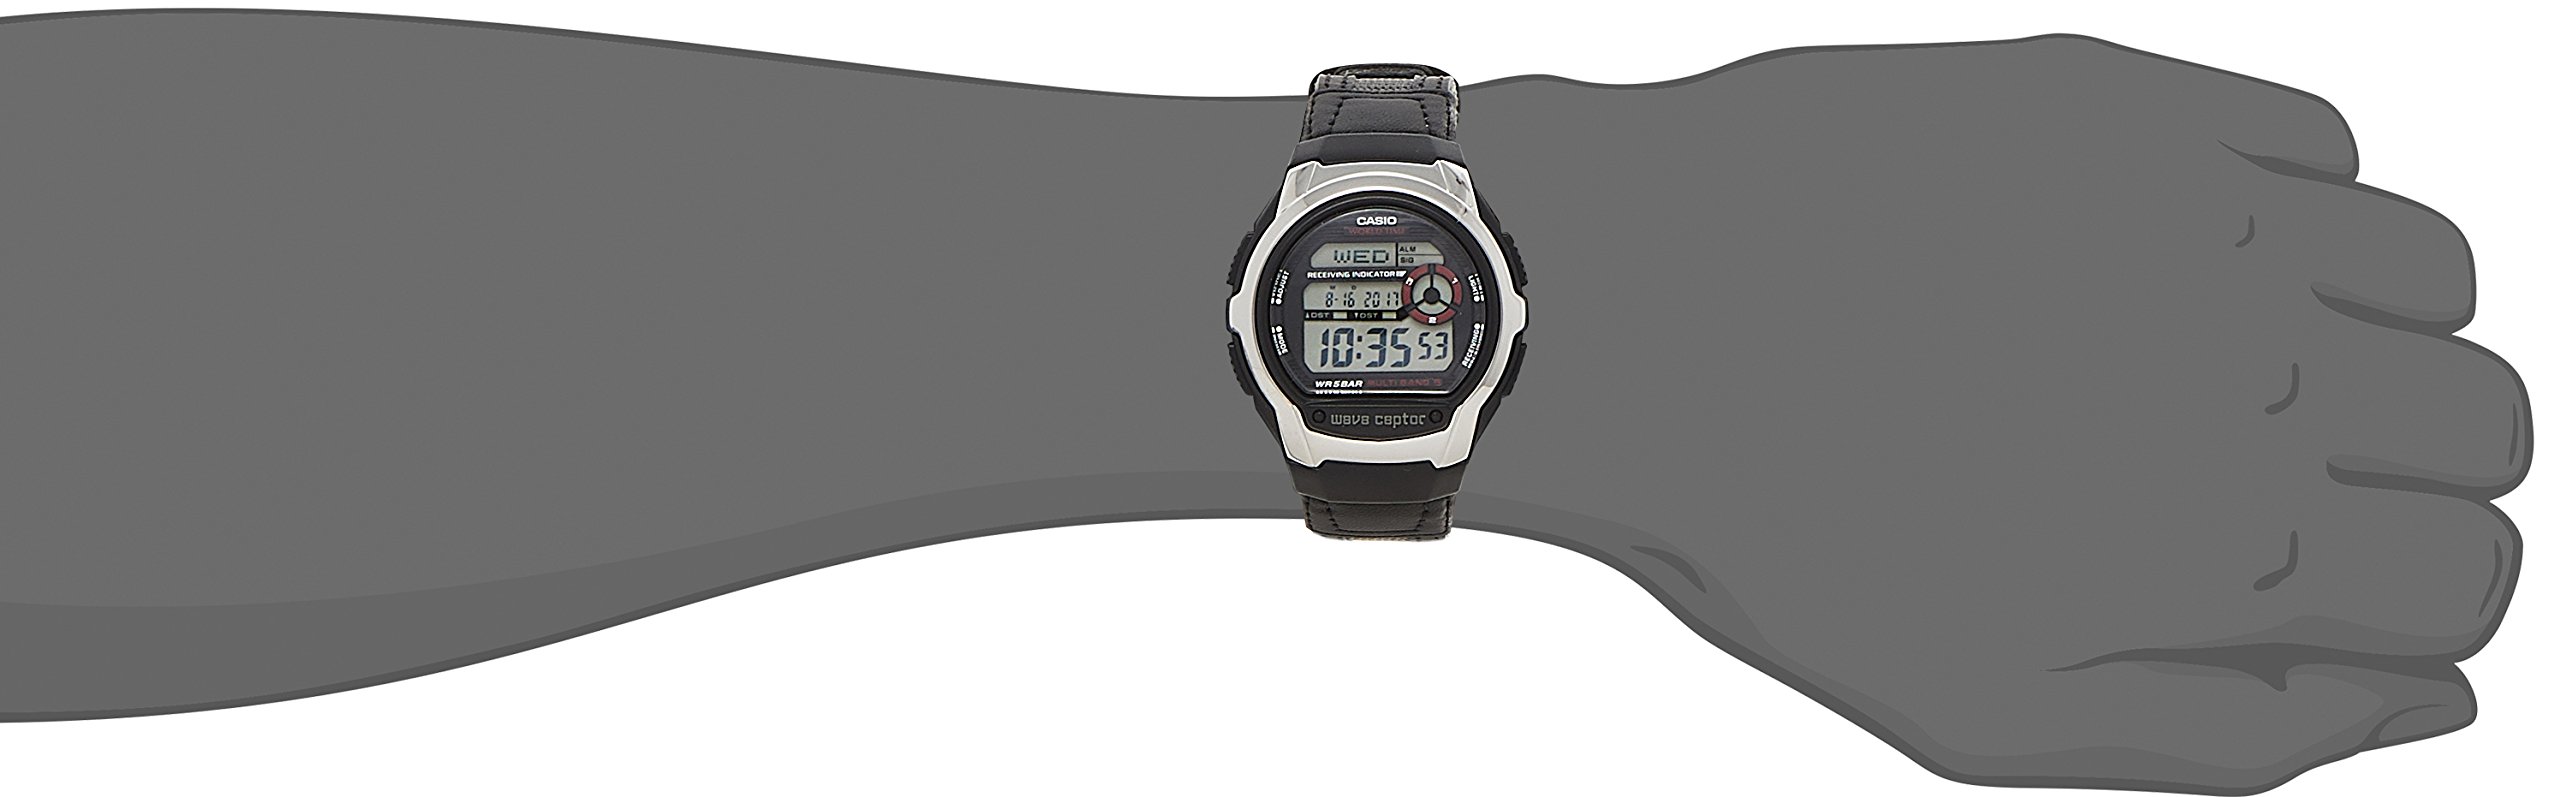 Casio WV-M60B-1AJF Wave Sceptor Men's Wristwatch, Black, Wrist Watch for 5 stations around the world, Radio Solar, Multi-languages Day Display